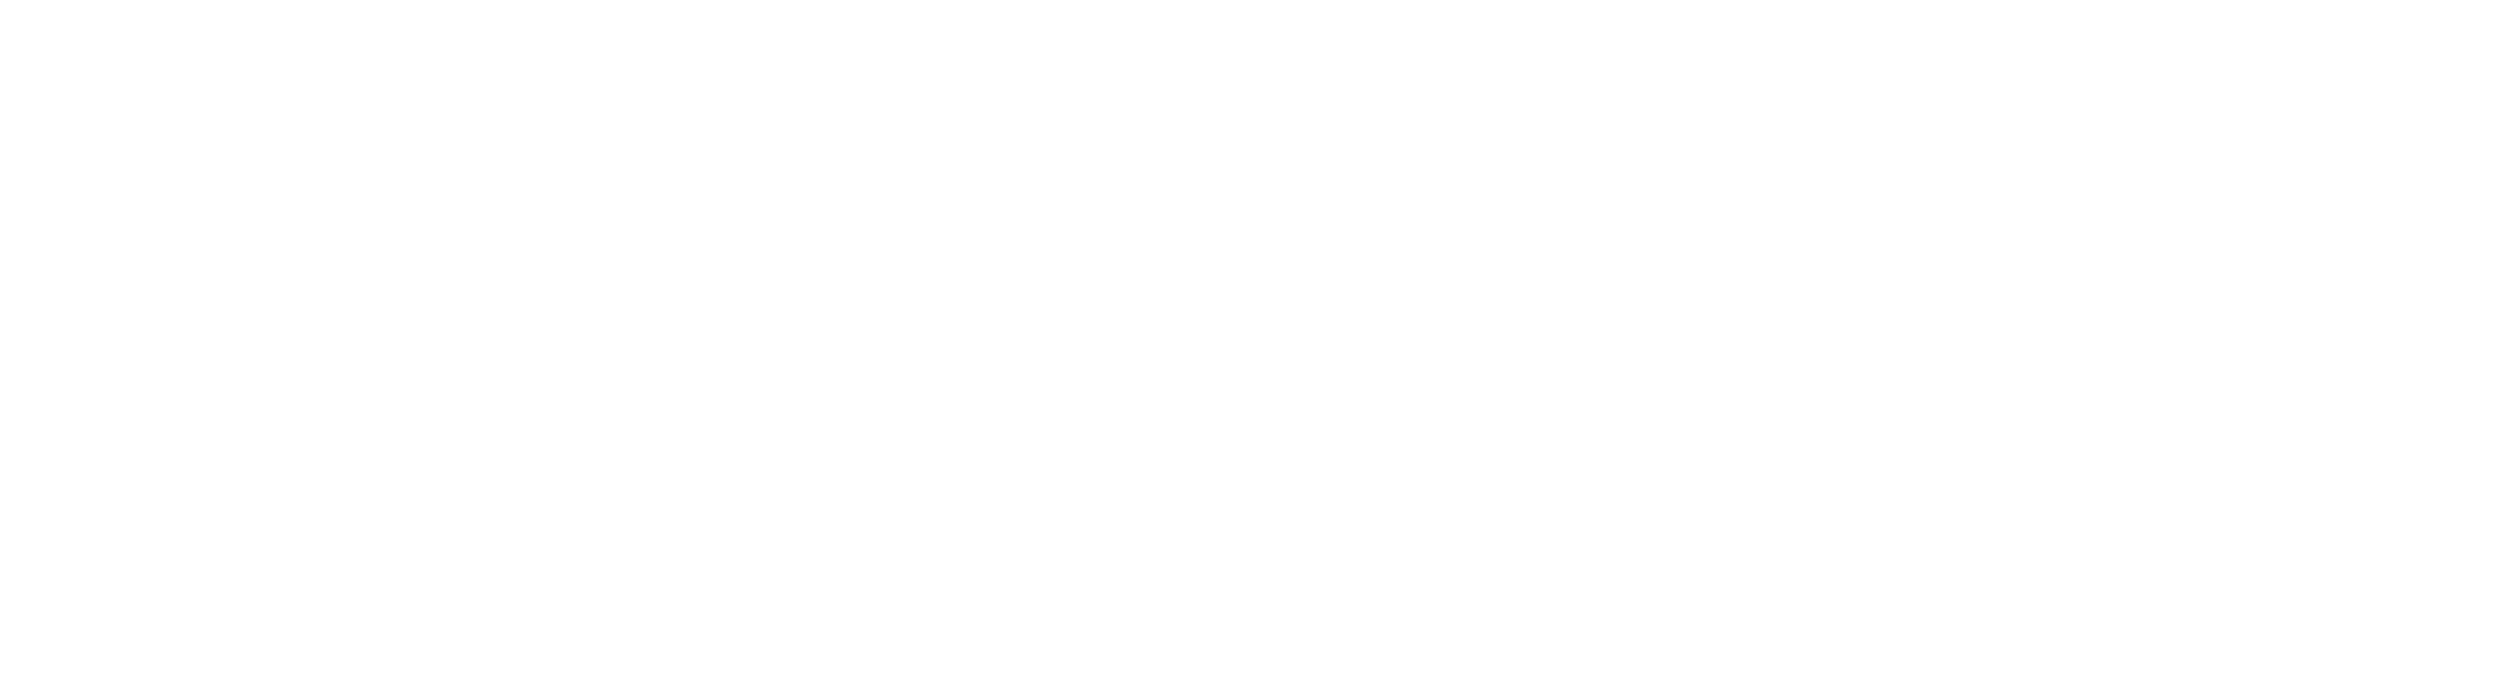 healt-logo.png